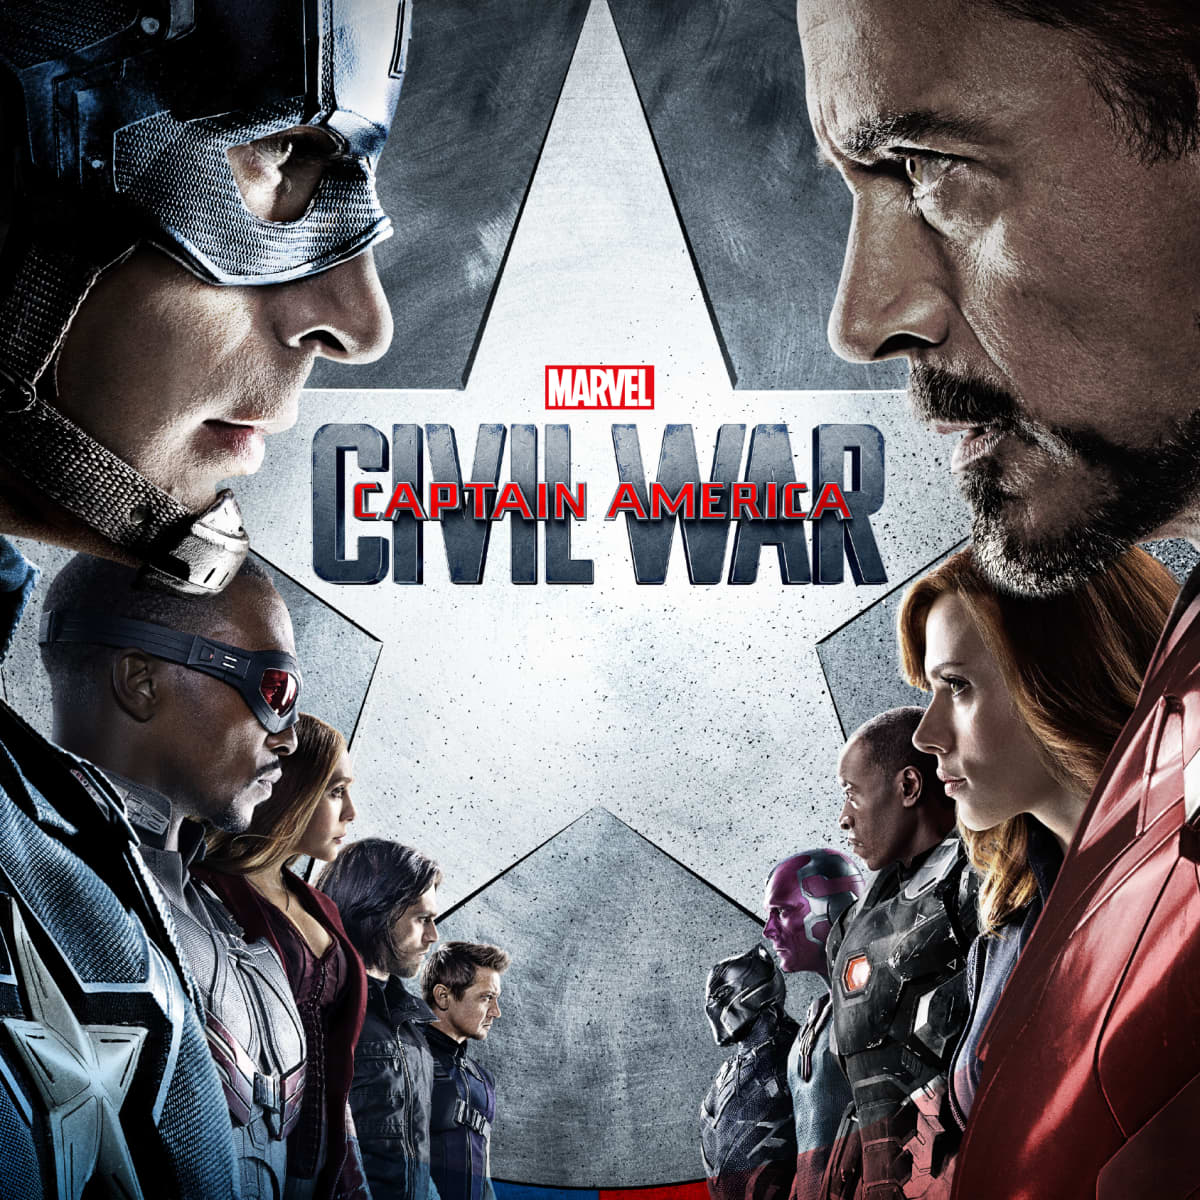 Captain America: Civil War' Trailer 2 Breakdown